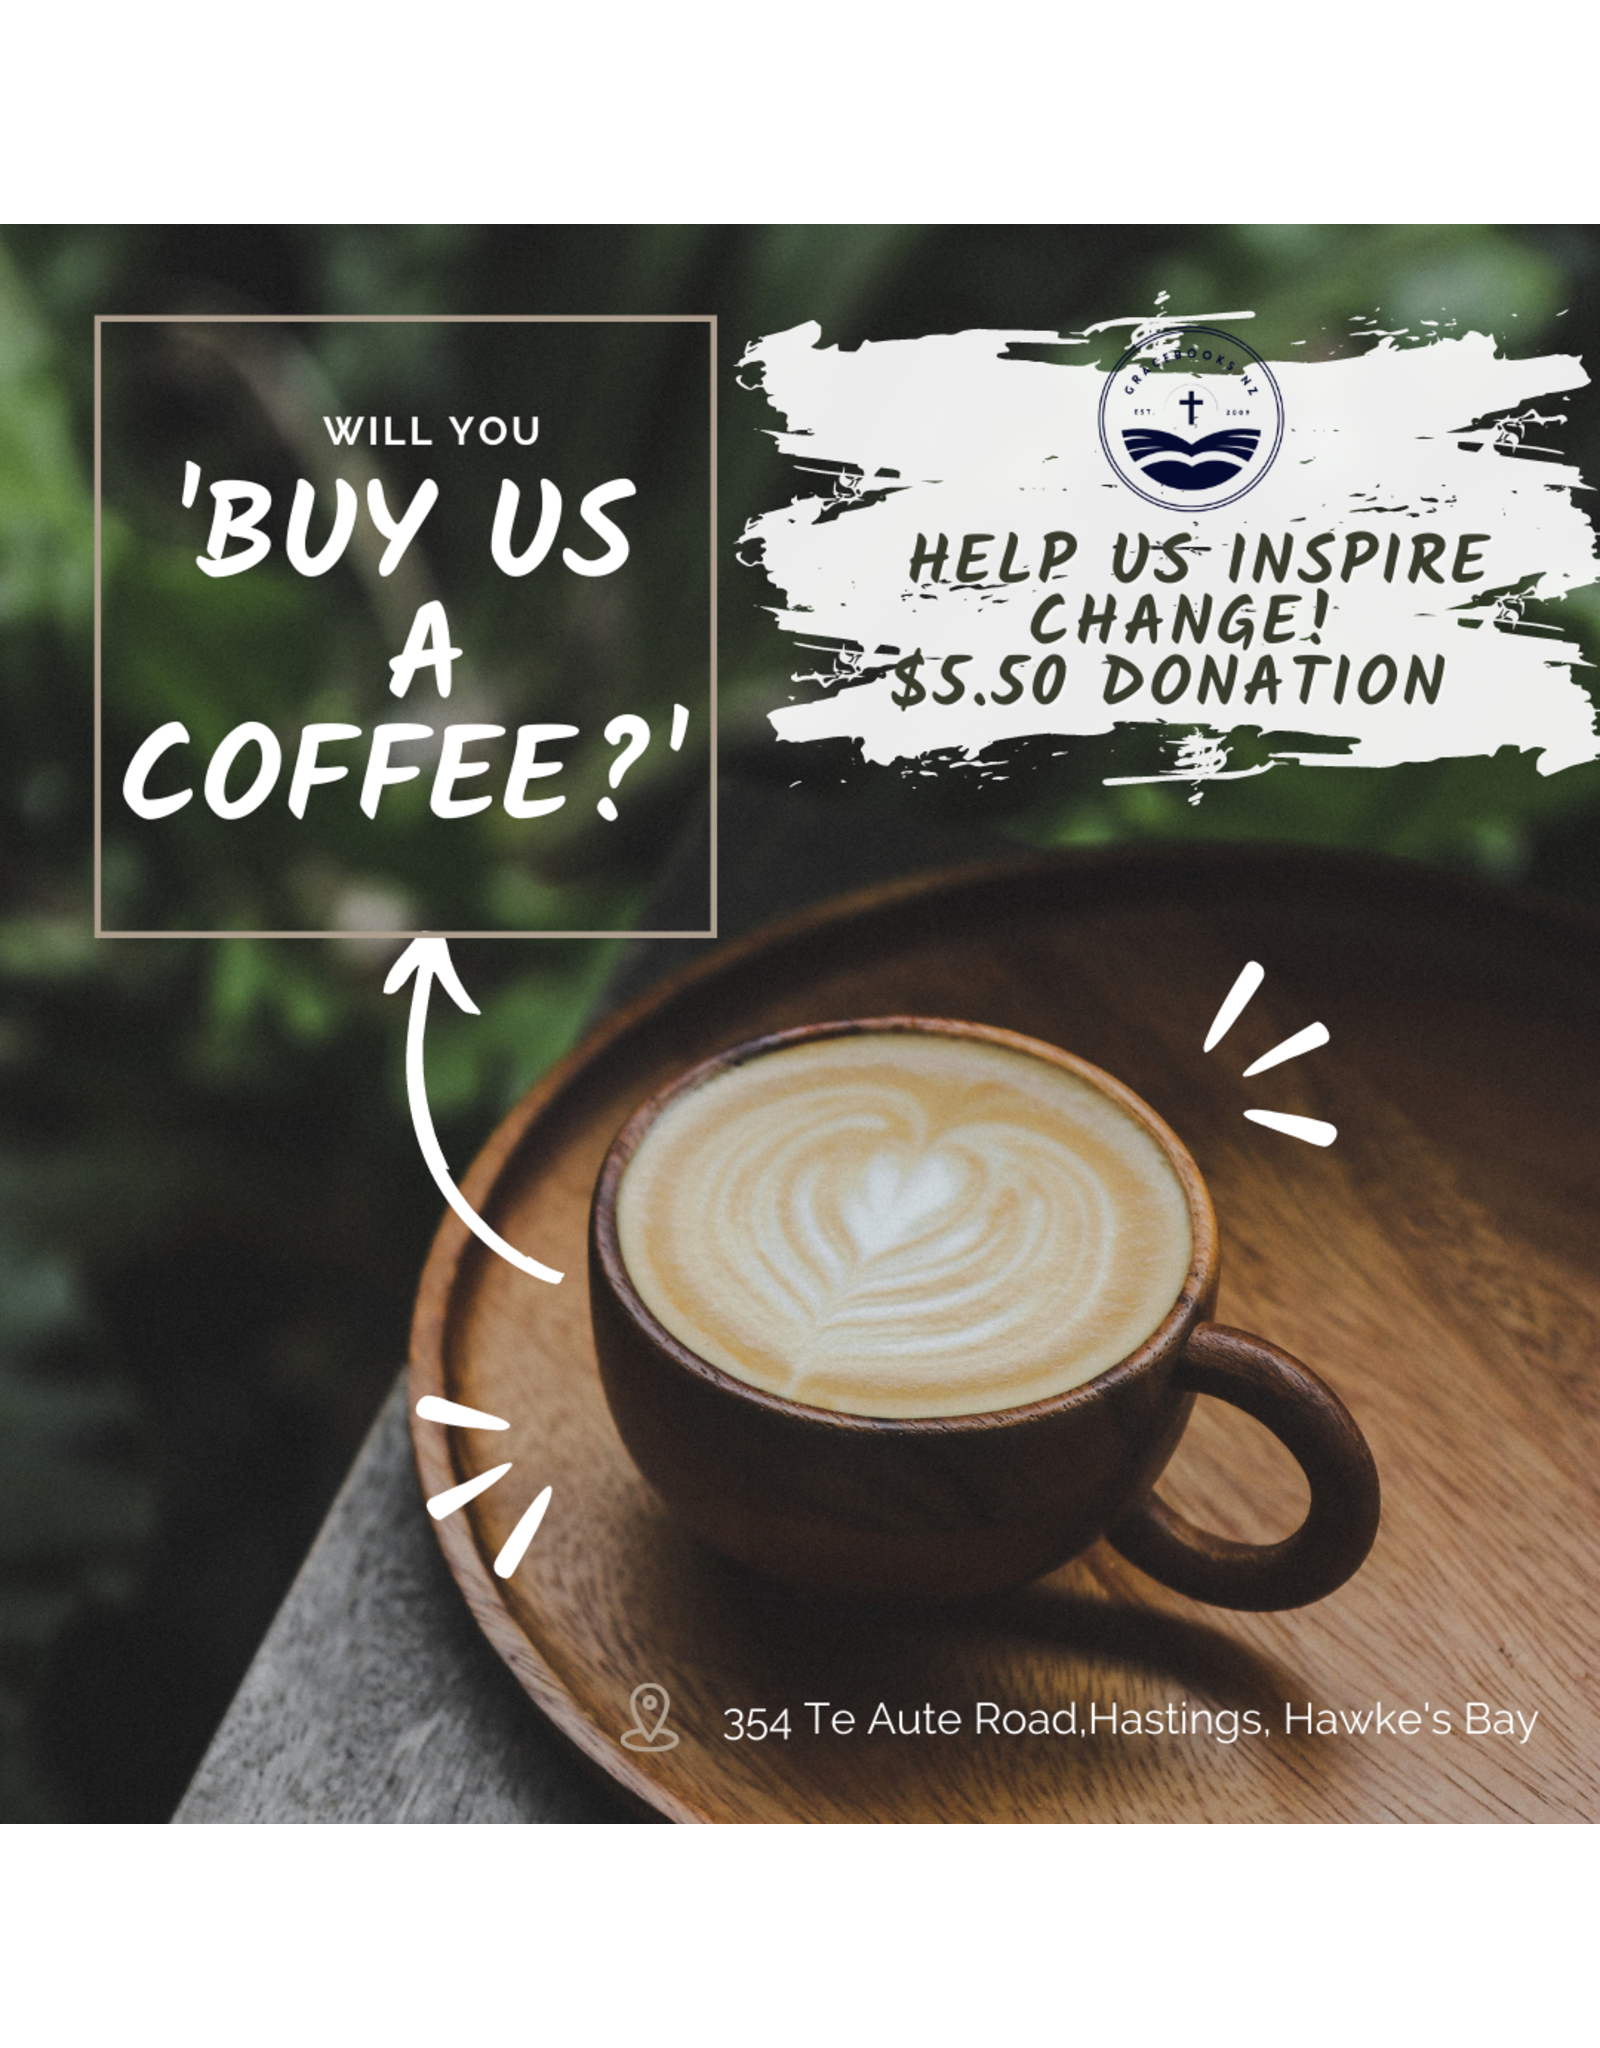 Gracebooks Donation - Buy us a coffee Donation